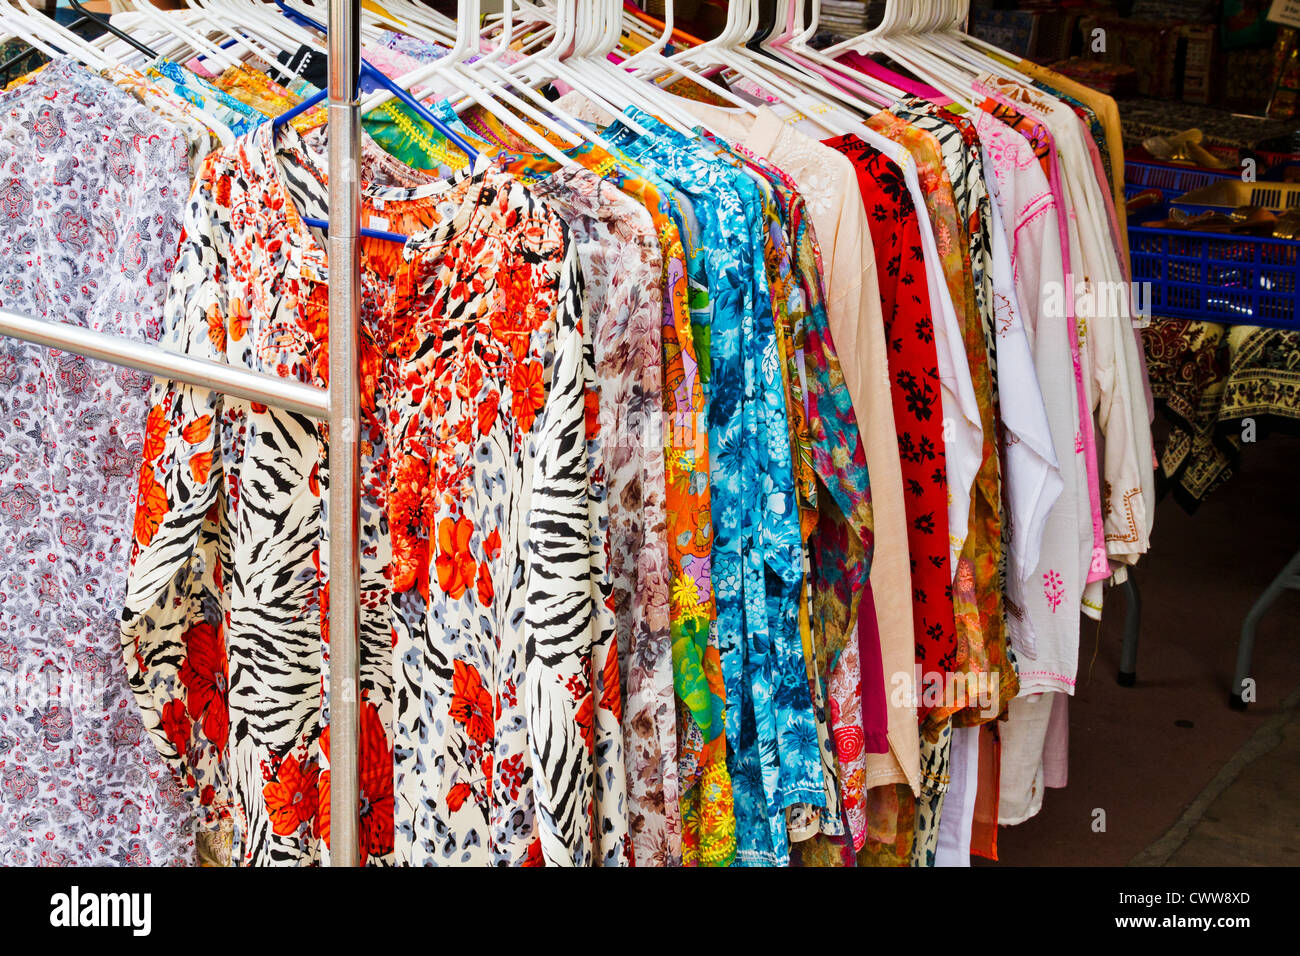 Indian shirts for sale in an arcade in 'Santa Barbara', California Stock Photo